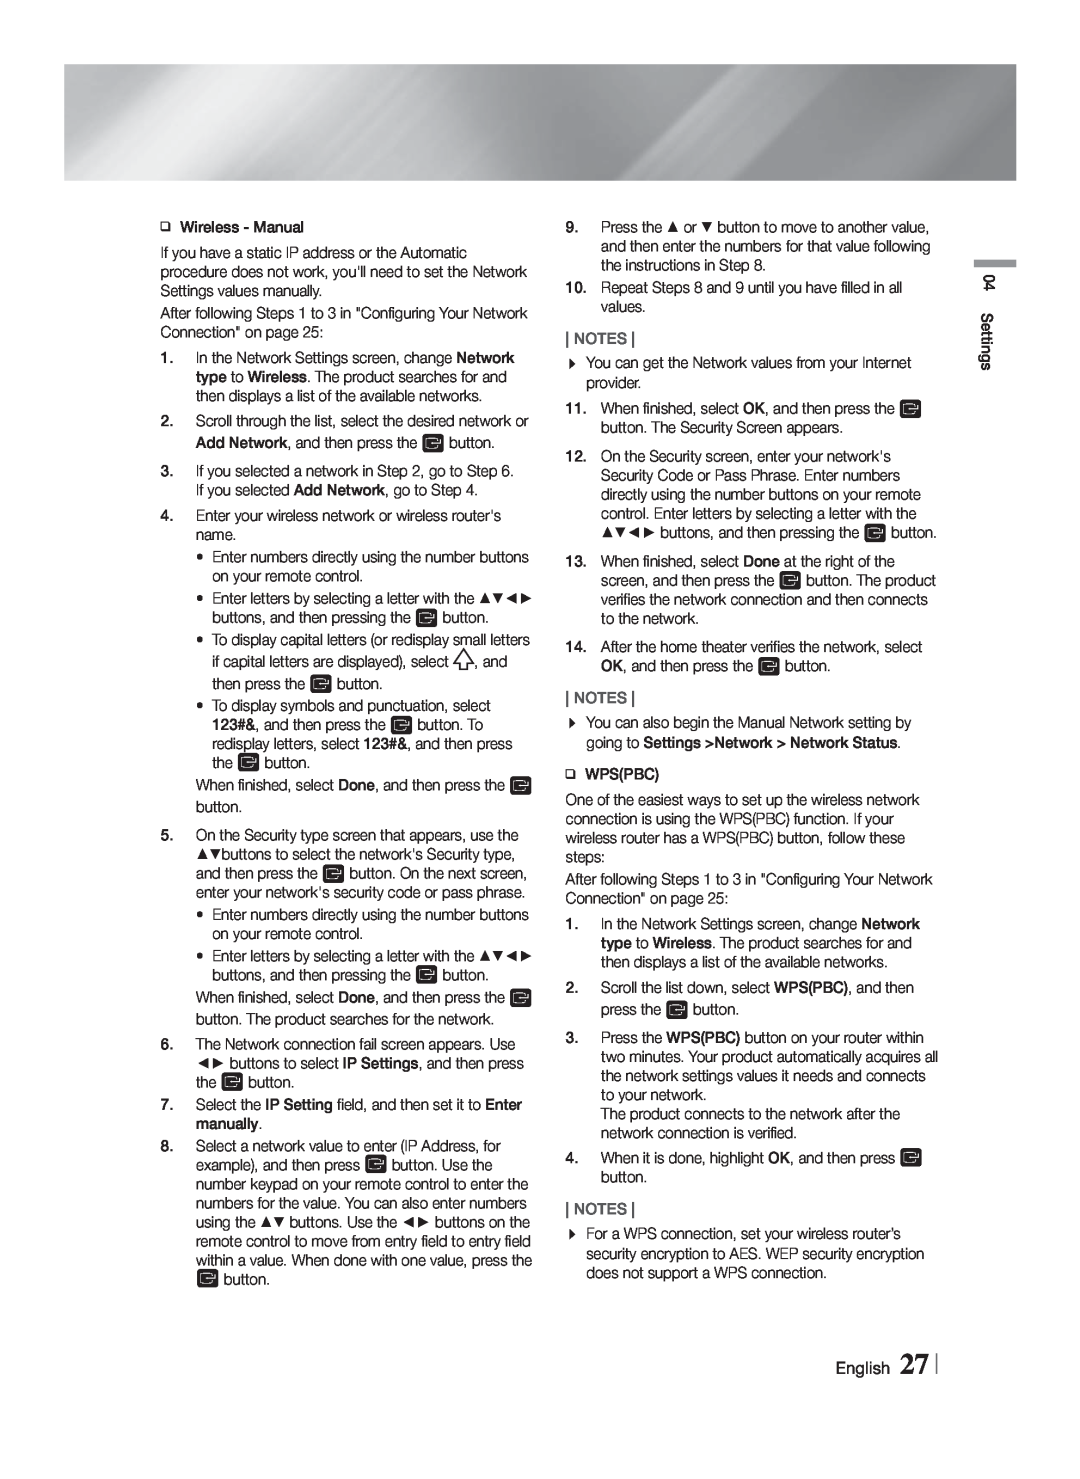 Samsung HT-F9730W/ZA user manual English 27, Notes 